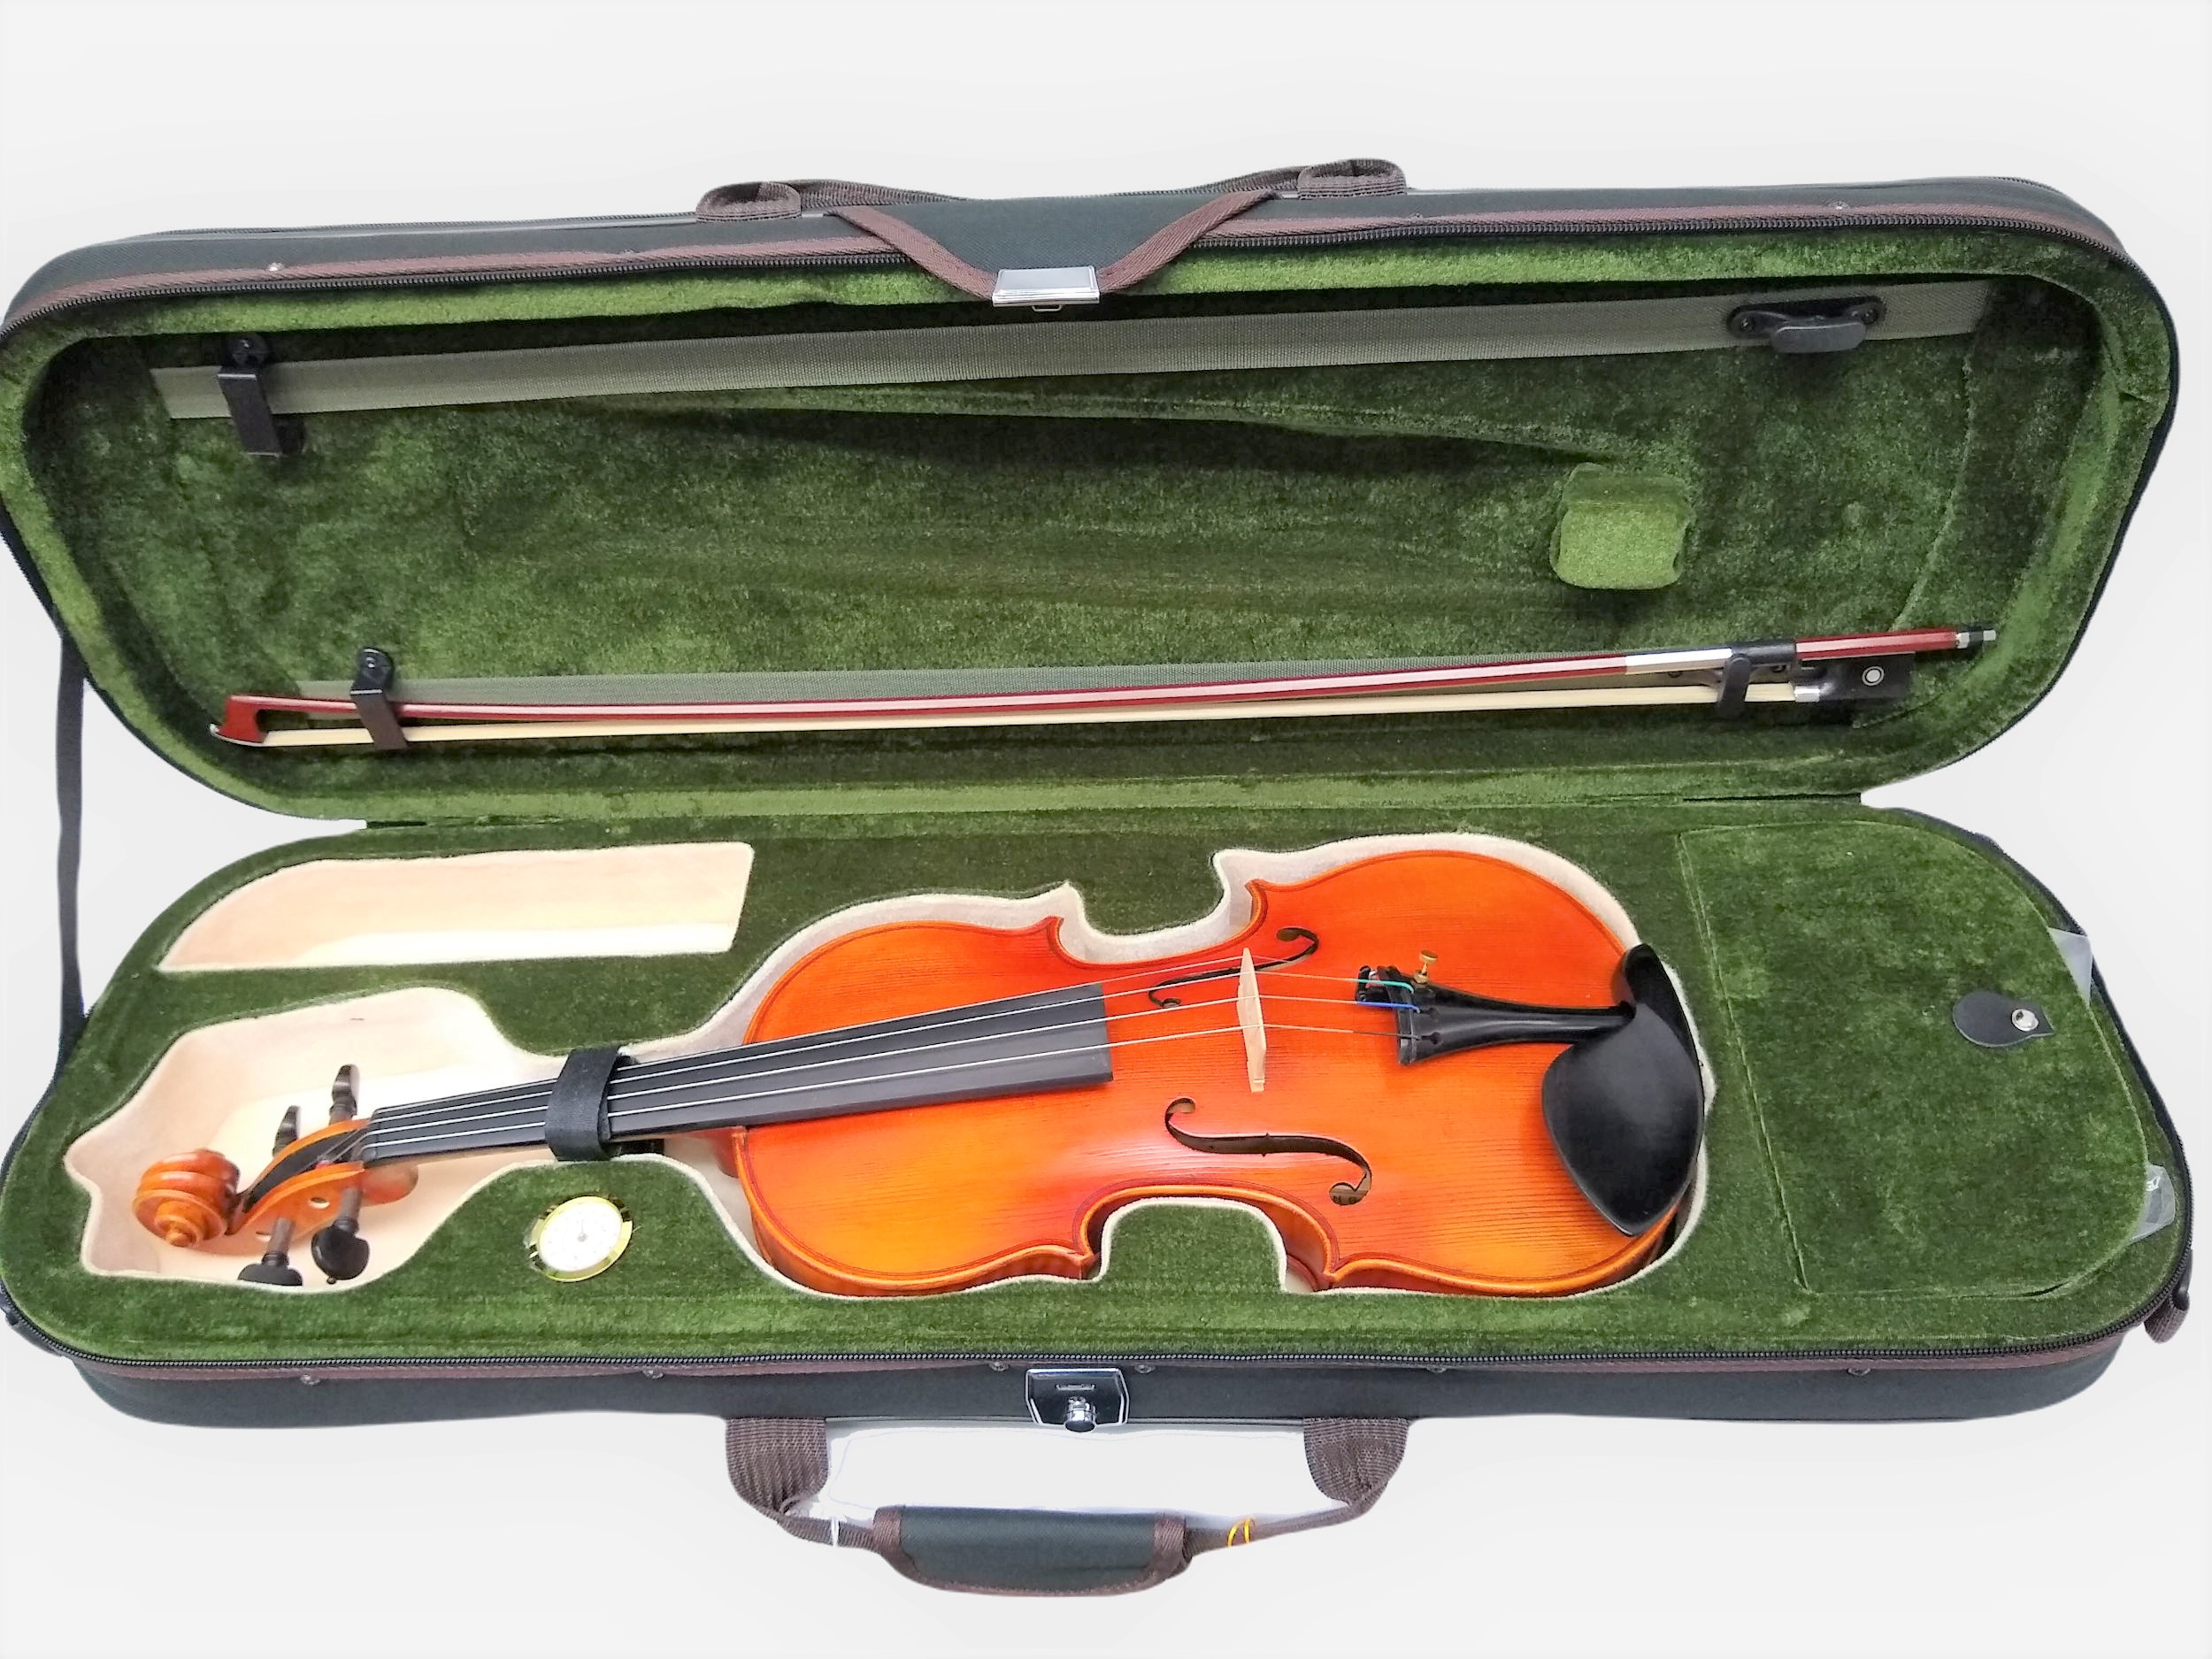 Vienna Strings Violin 4/4 European Tradition Berlin New For 2021